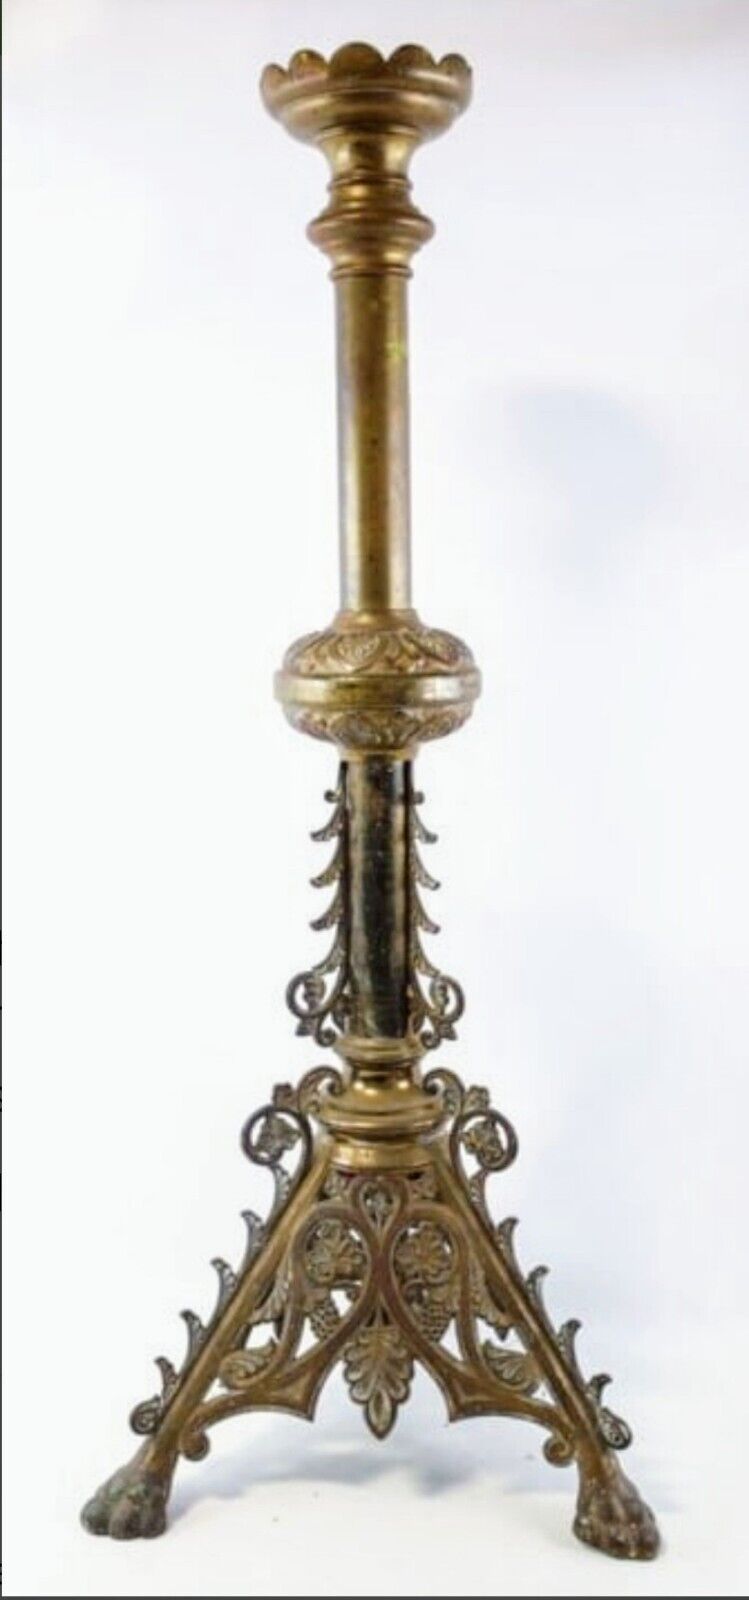 + Large Antique Vintage Middle East Brass Paschal Candlestick